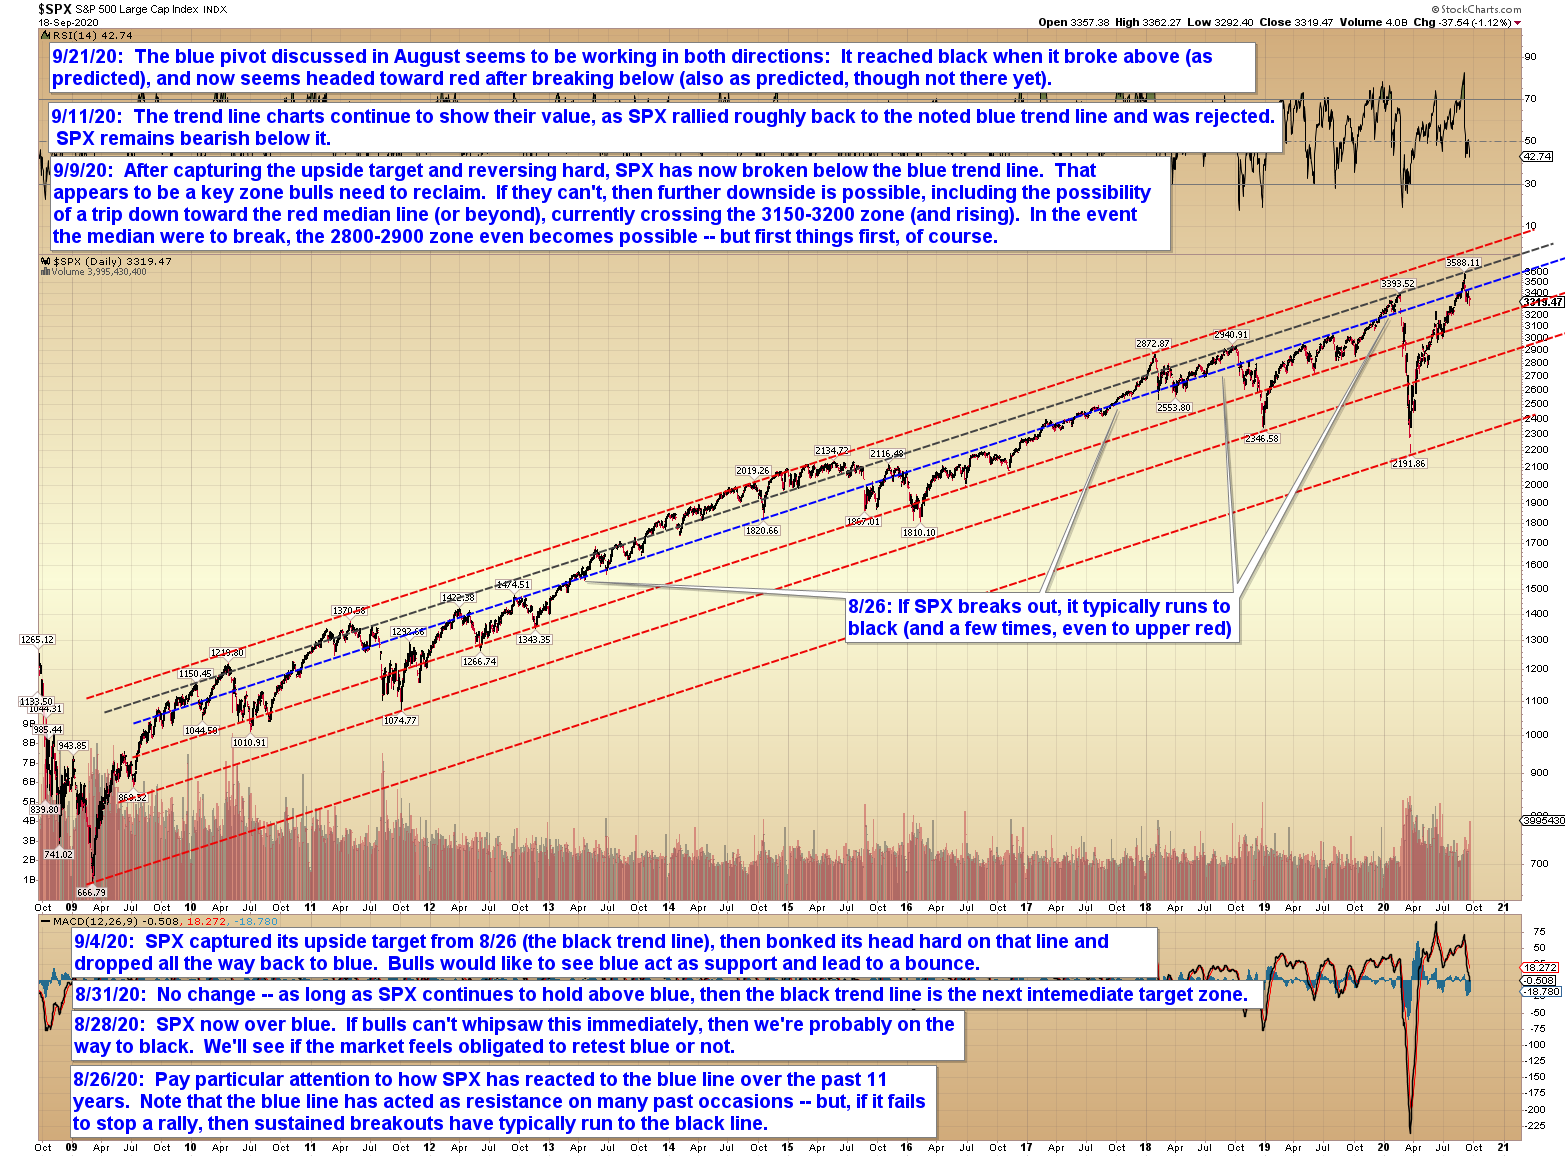 Pretzel Logic's Market Charts and Analysis: SPX Update ...